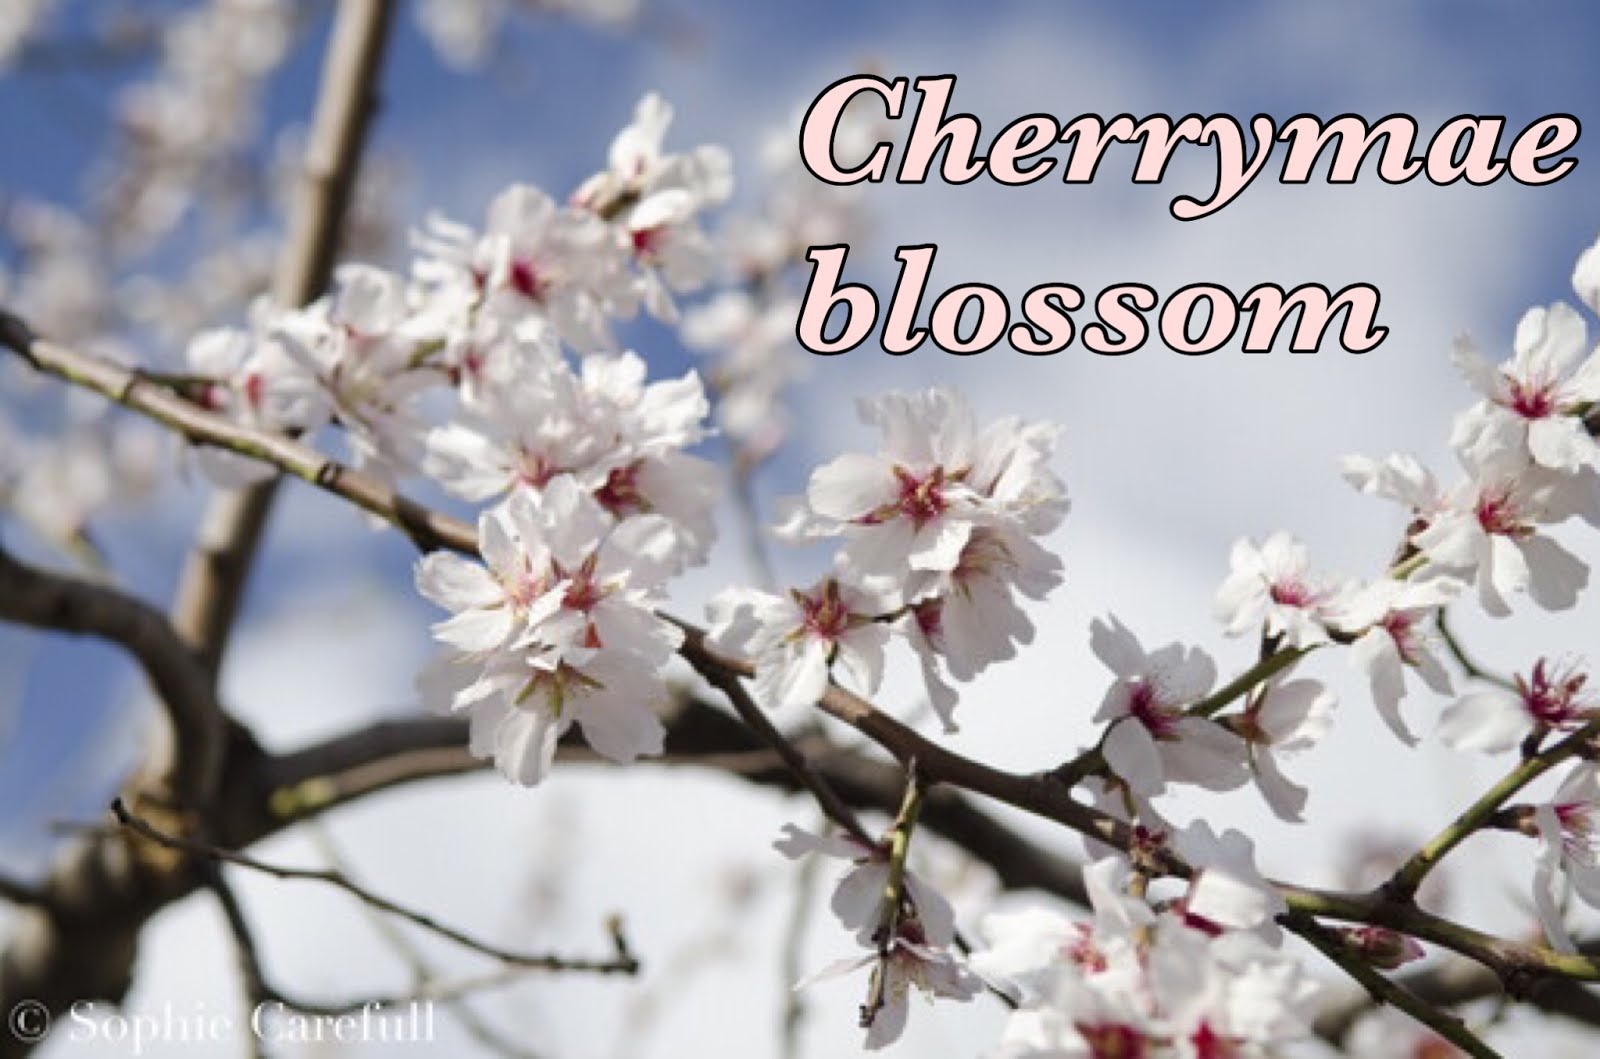 Cherrymae blossom